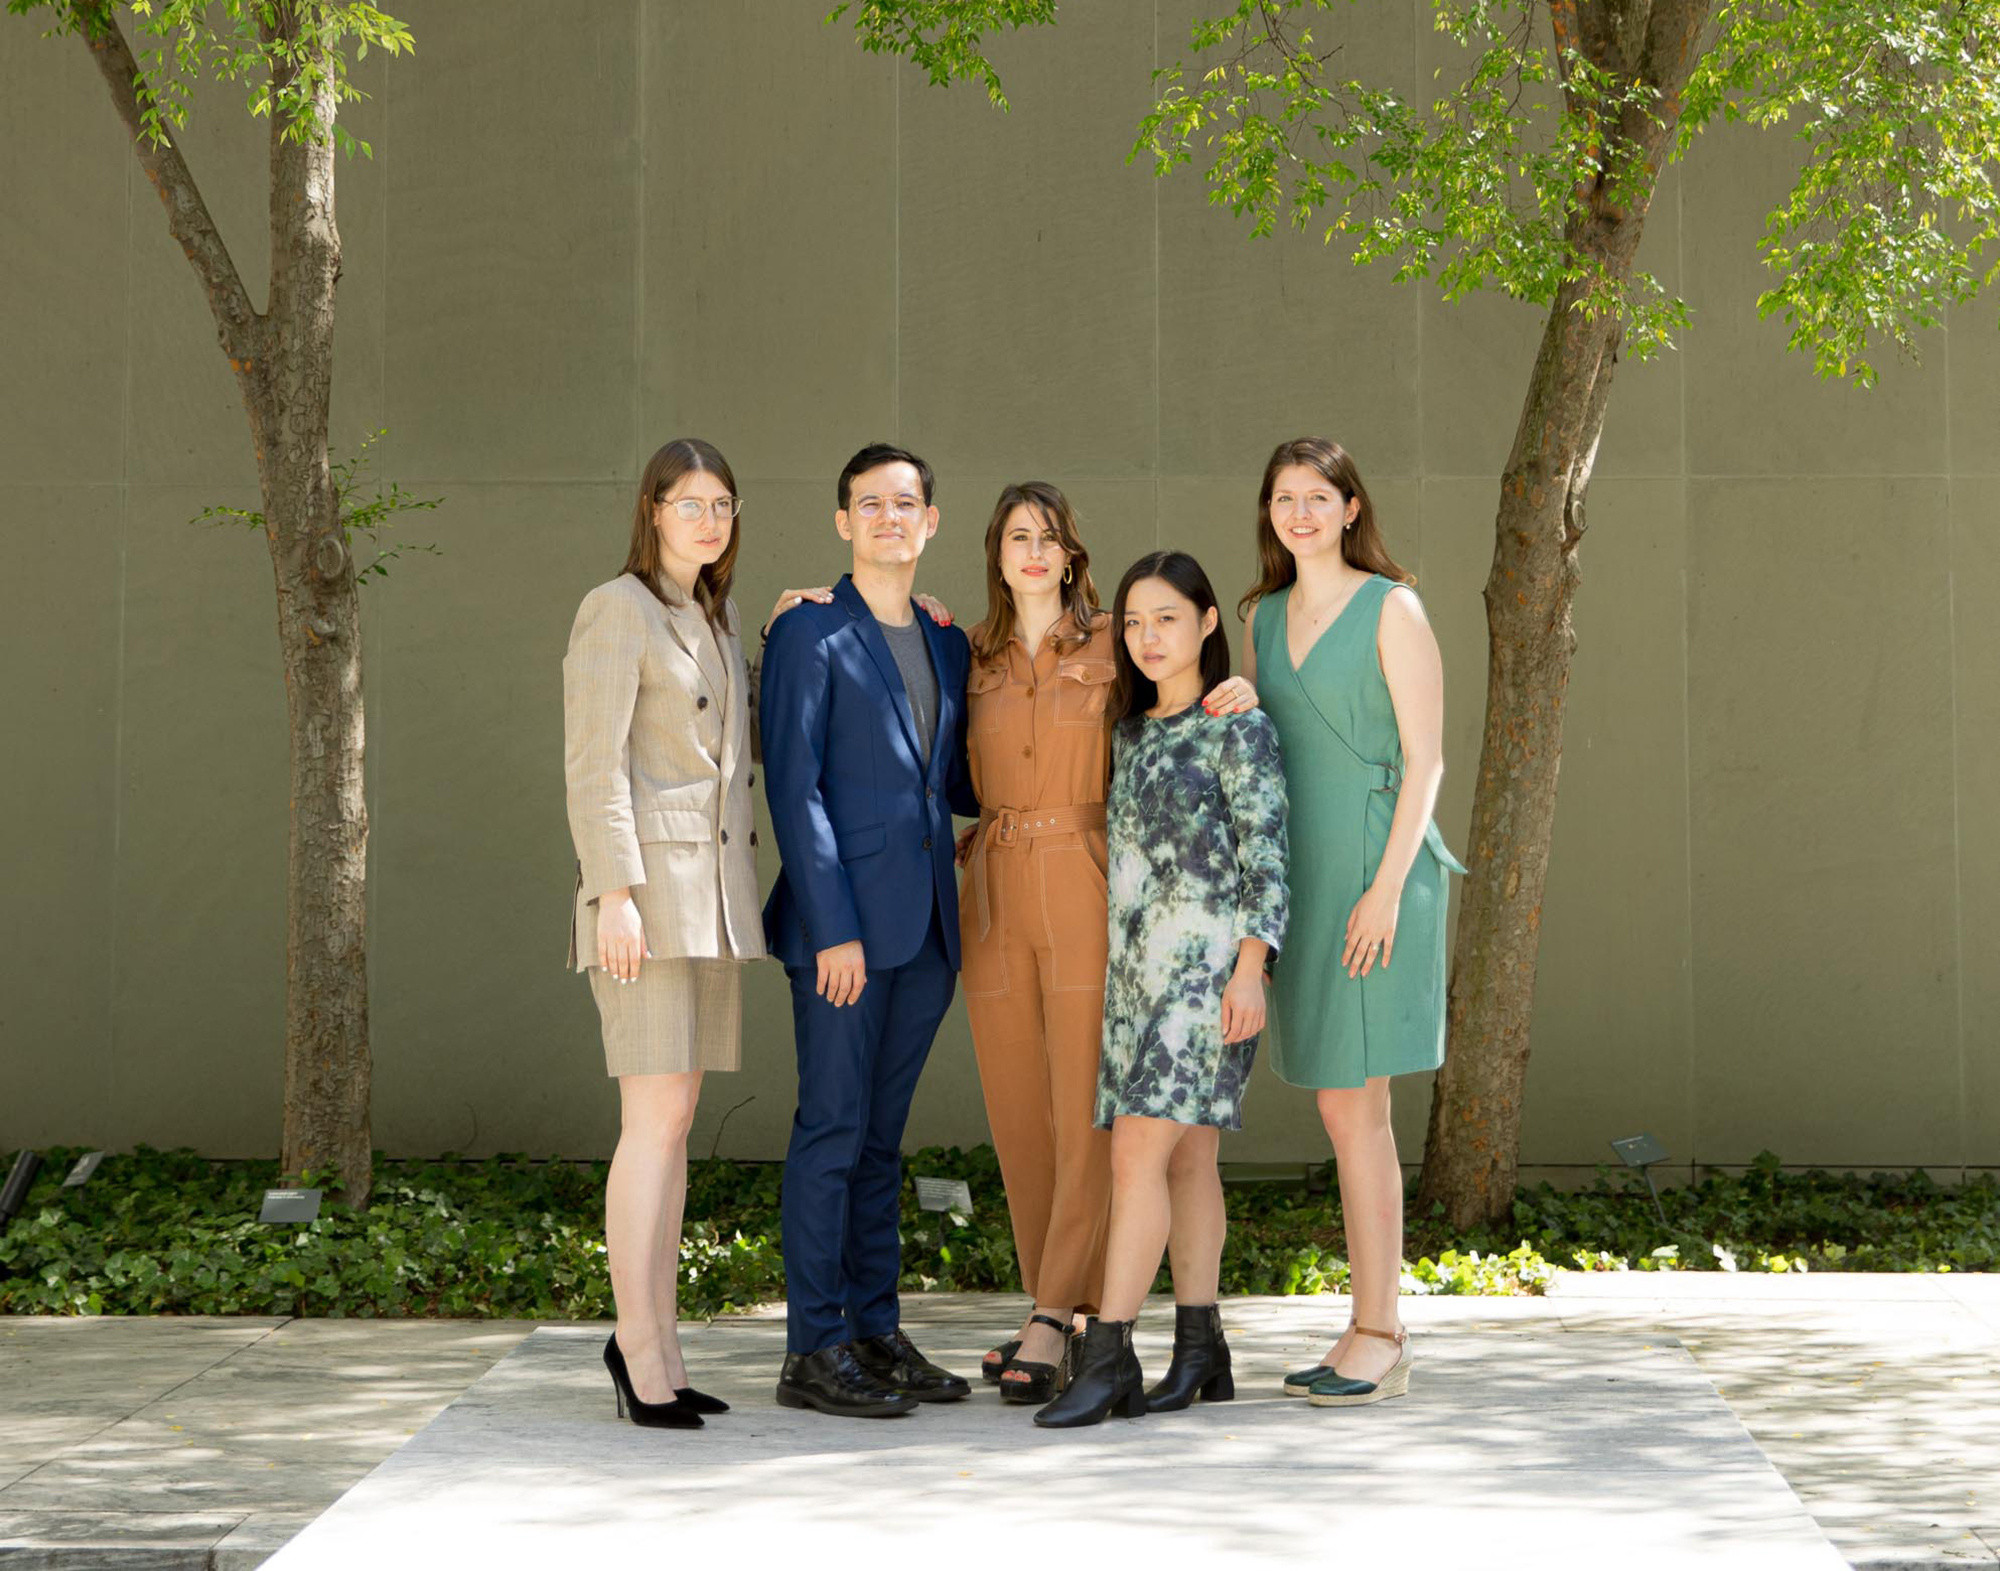 2020–21 MRC Fellows, from left: Piper Marshall, Joseph Henry, Francesca Ferrari, Jenny Tang, and Caitlin Ryan. Photo: Marcin J. Muchalski, Diamond Shot Studio